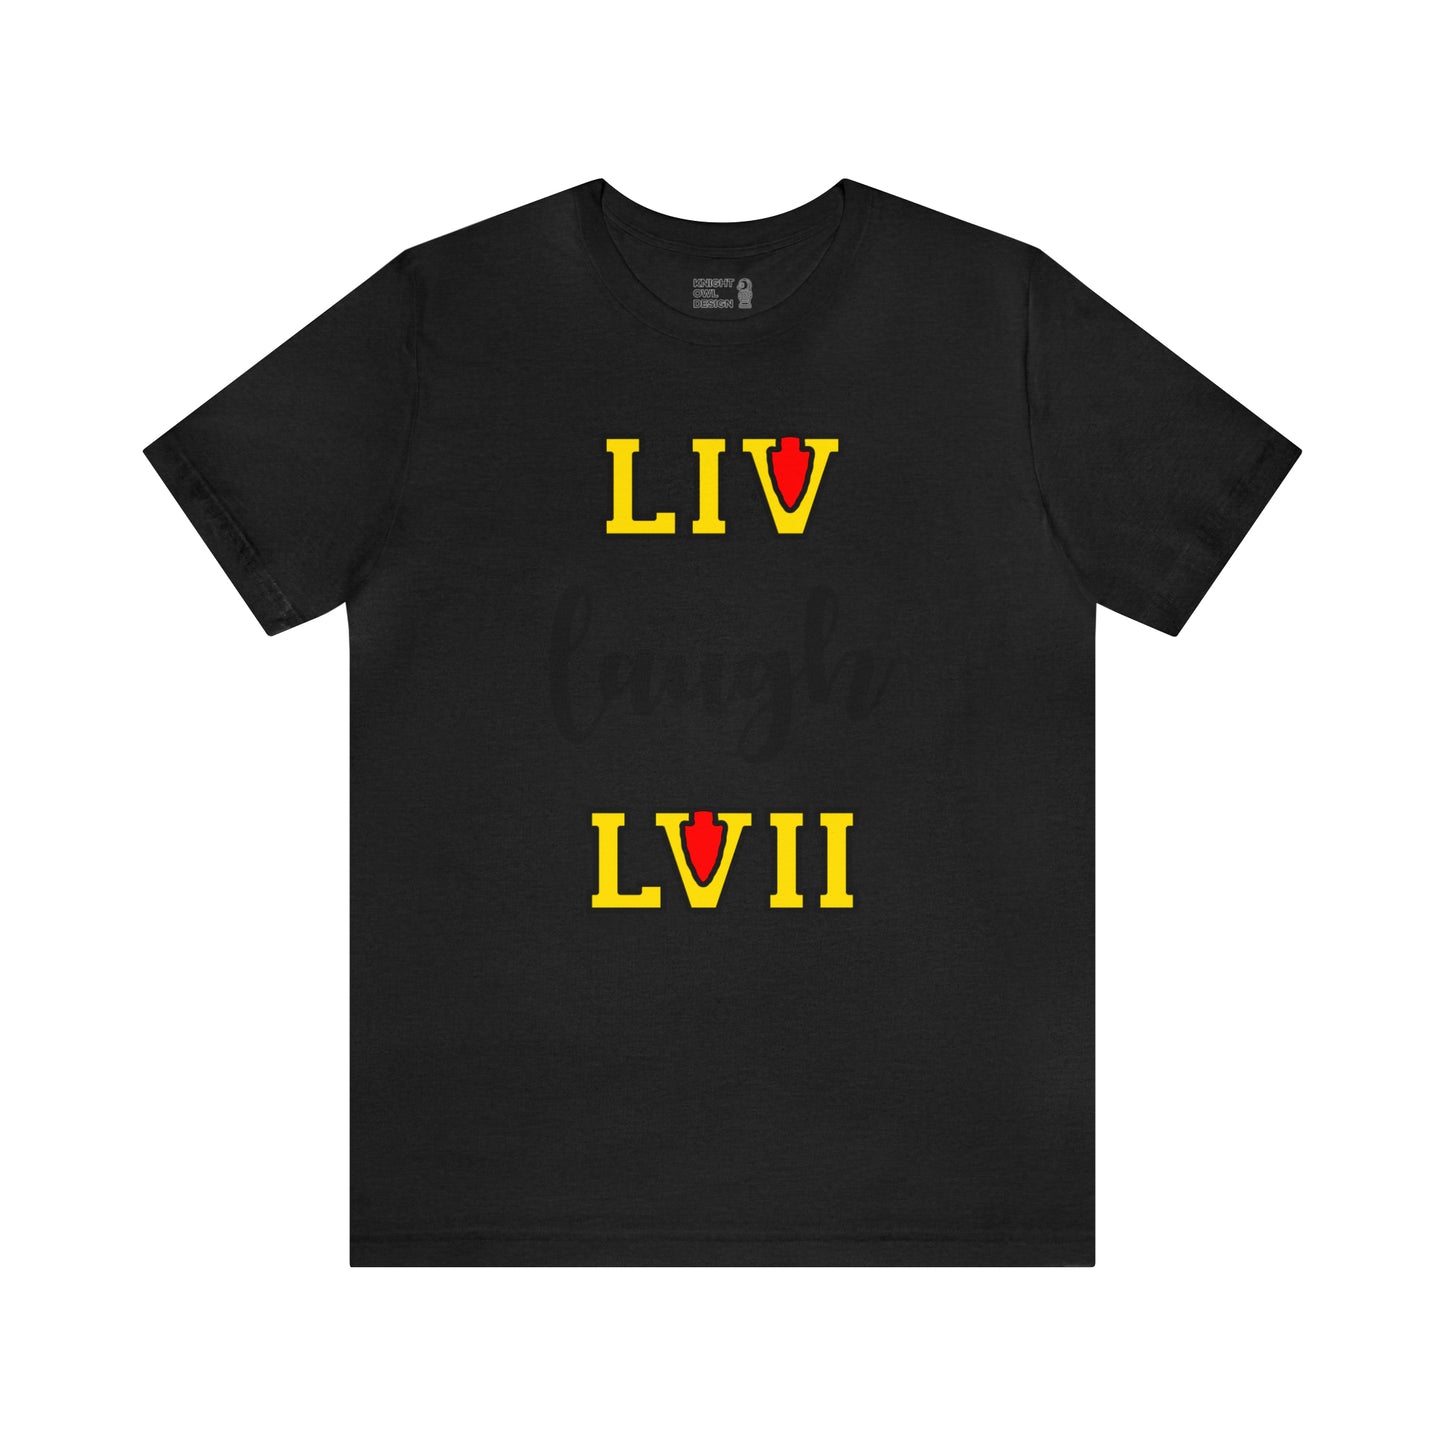 LIV Laugh LVII – Unisex Tee Shirt